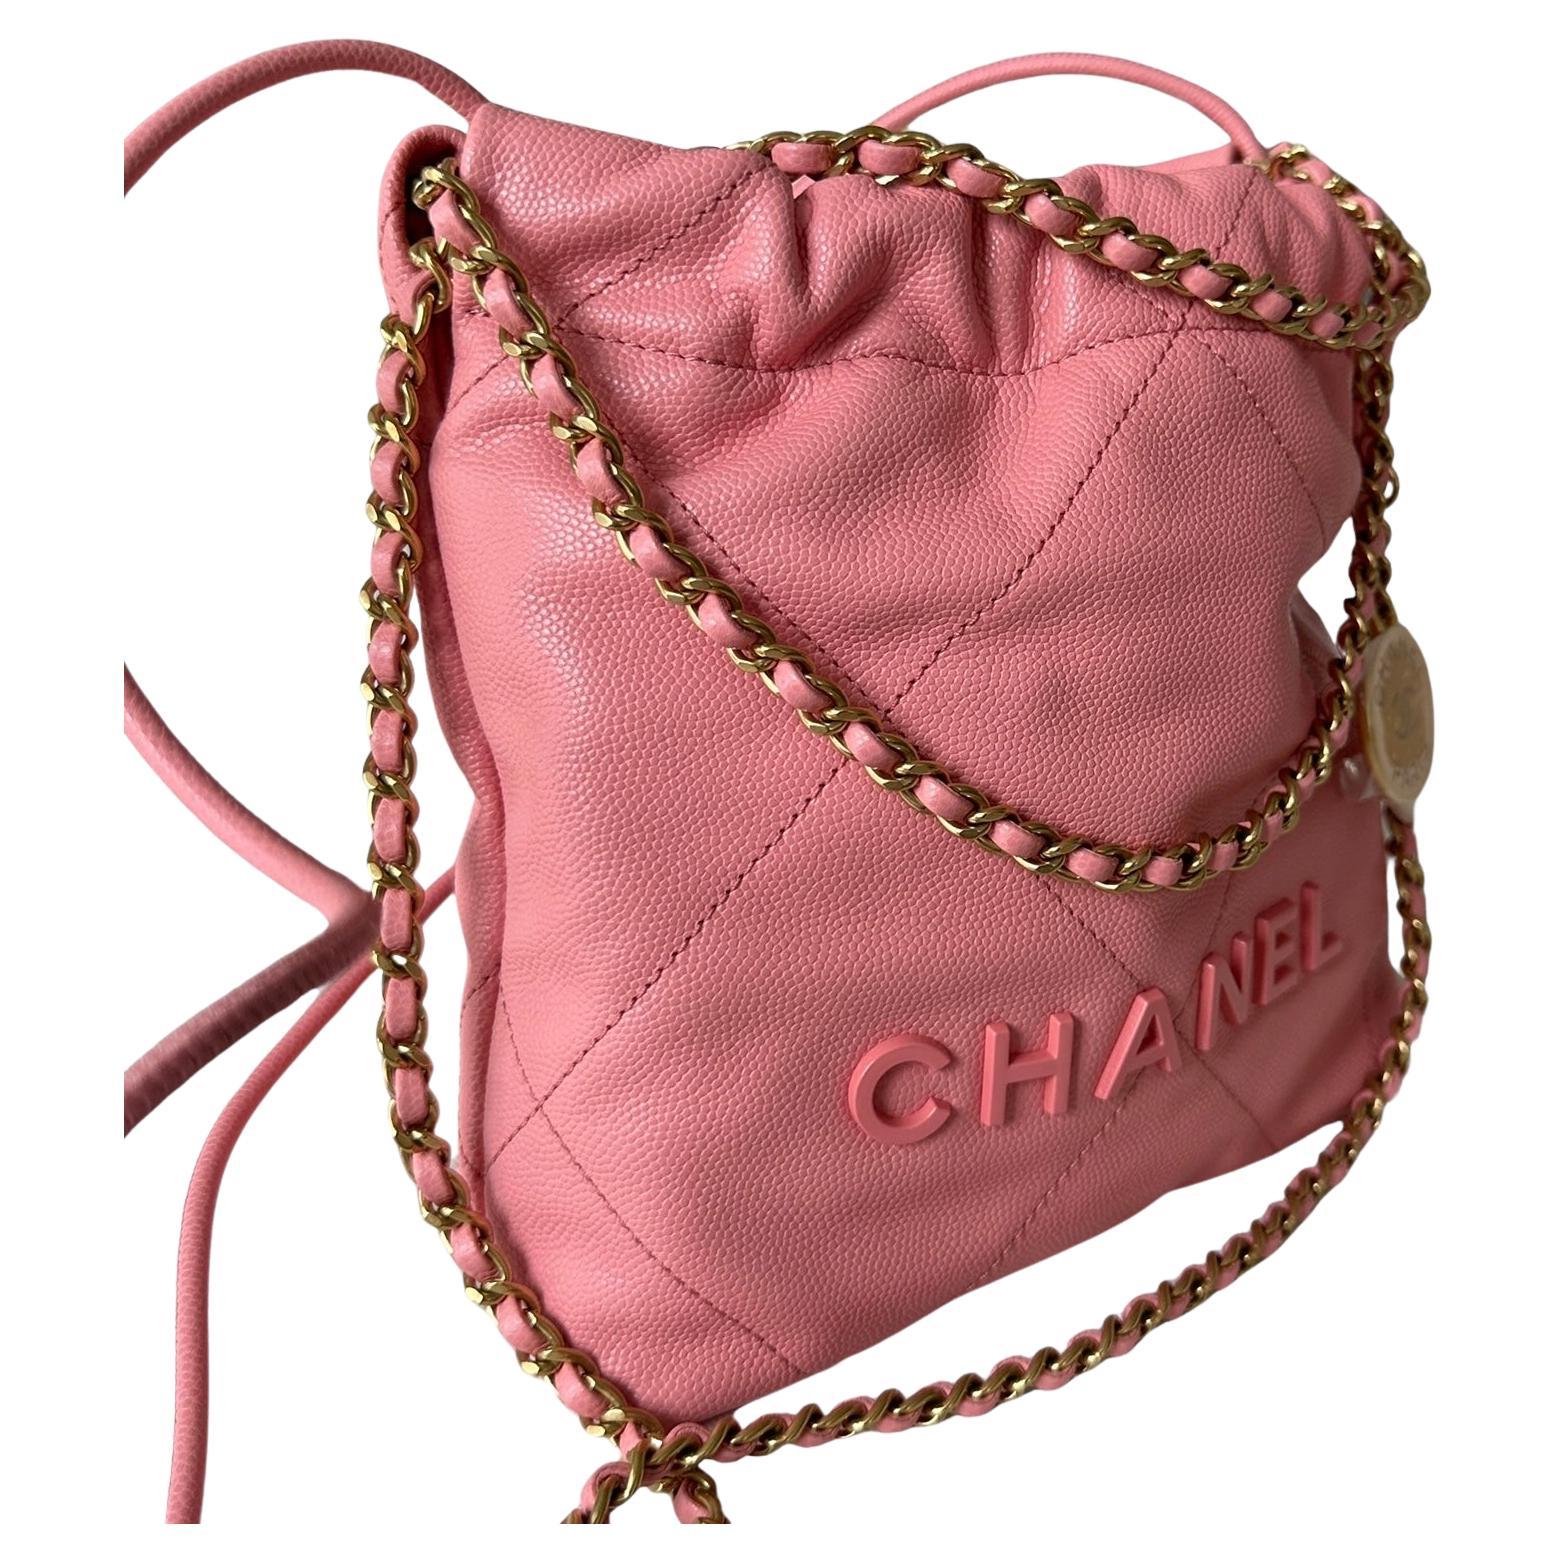 CHANEL 22 Mini Handbag Pink Coral Goldtone NEW For Sale